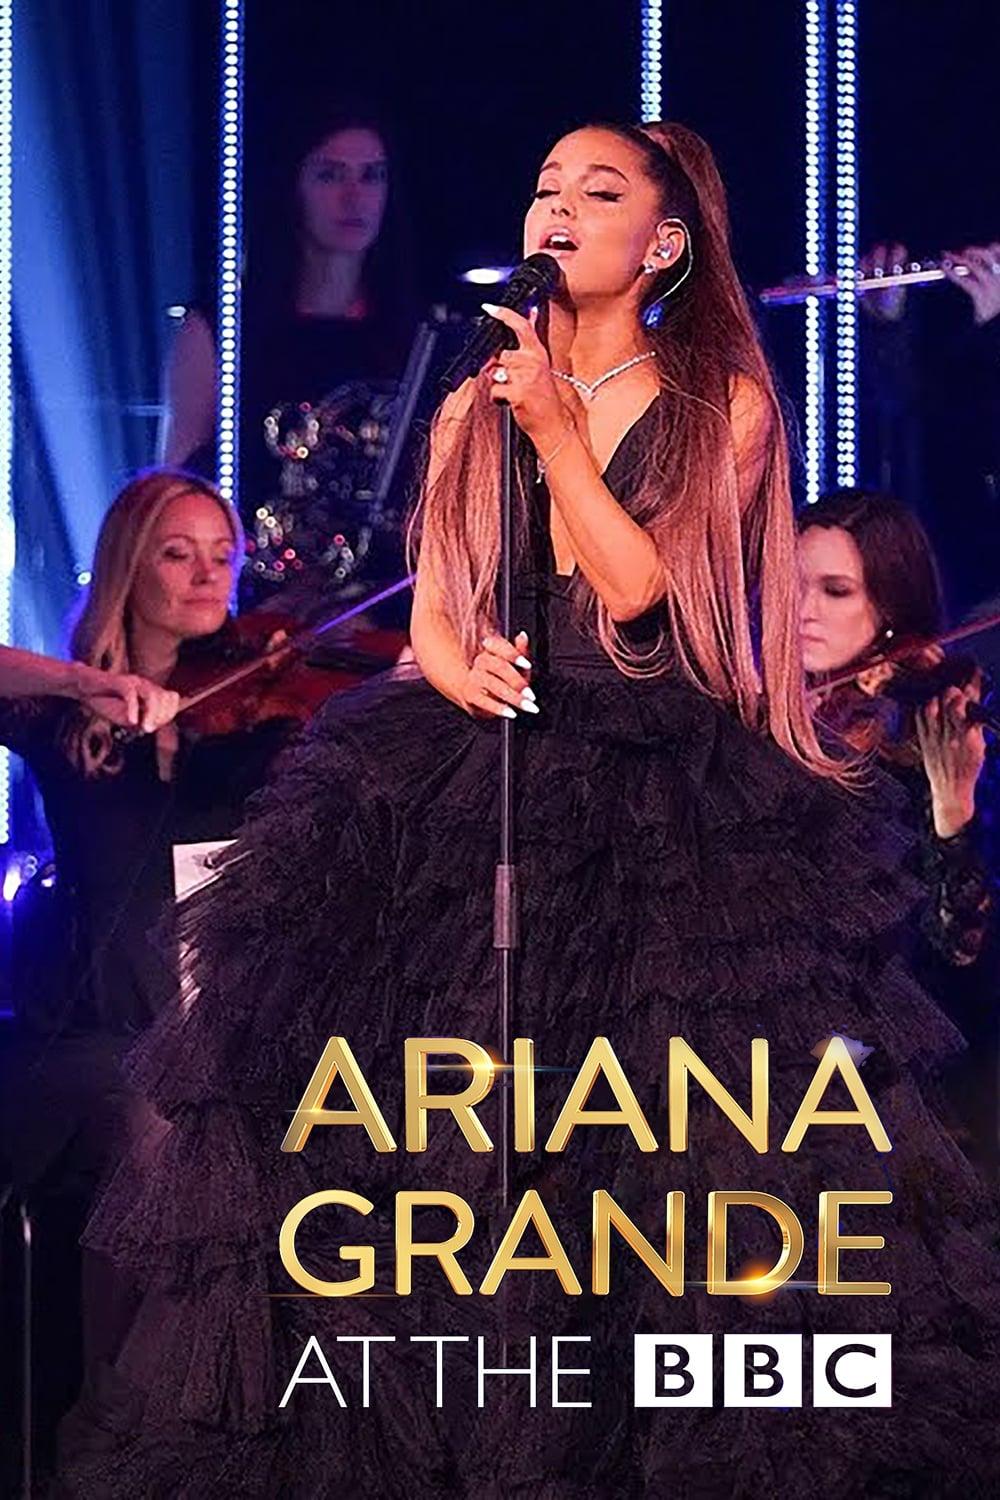 Ariana Grande at the BBC poster